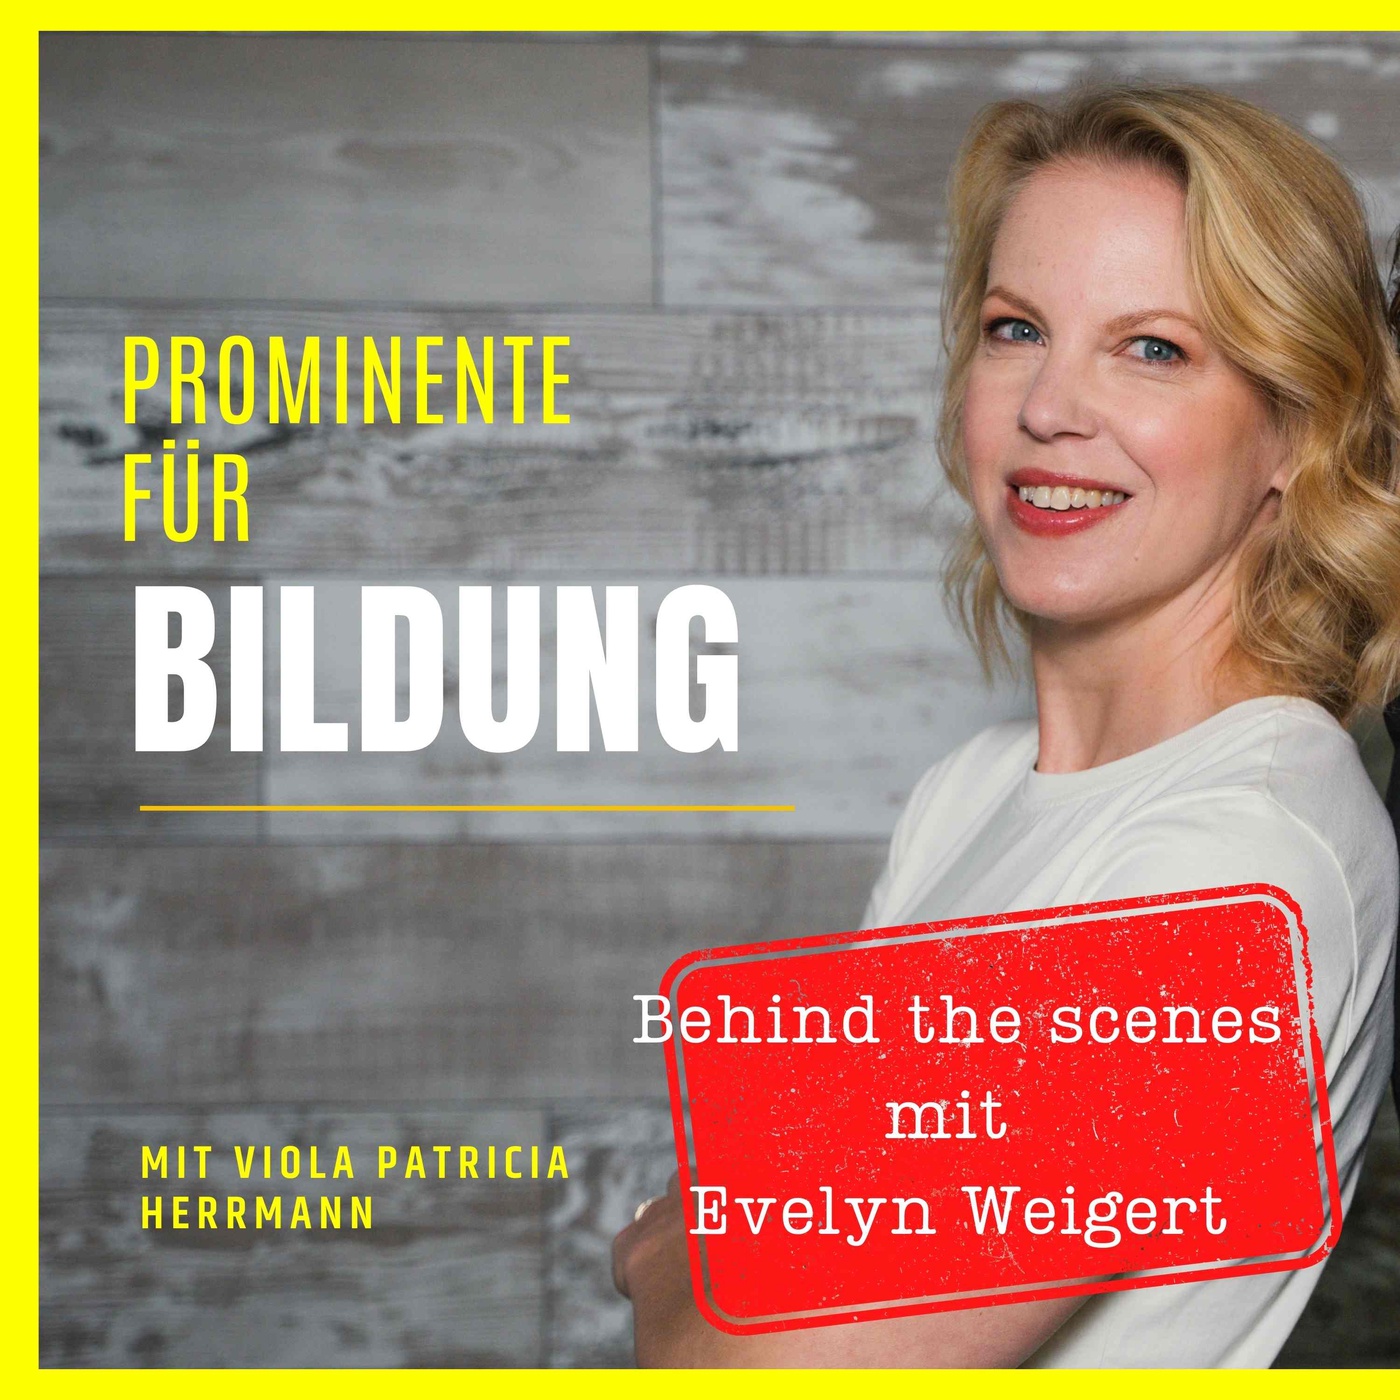 Behind the scenes mit Evelyn Weigert